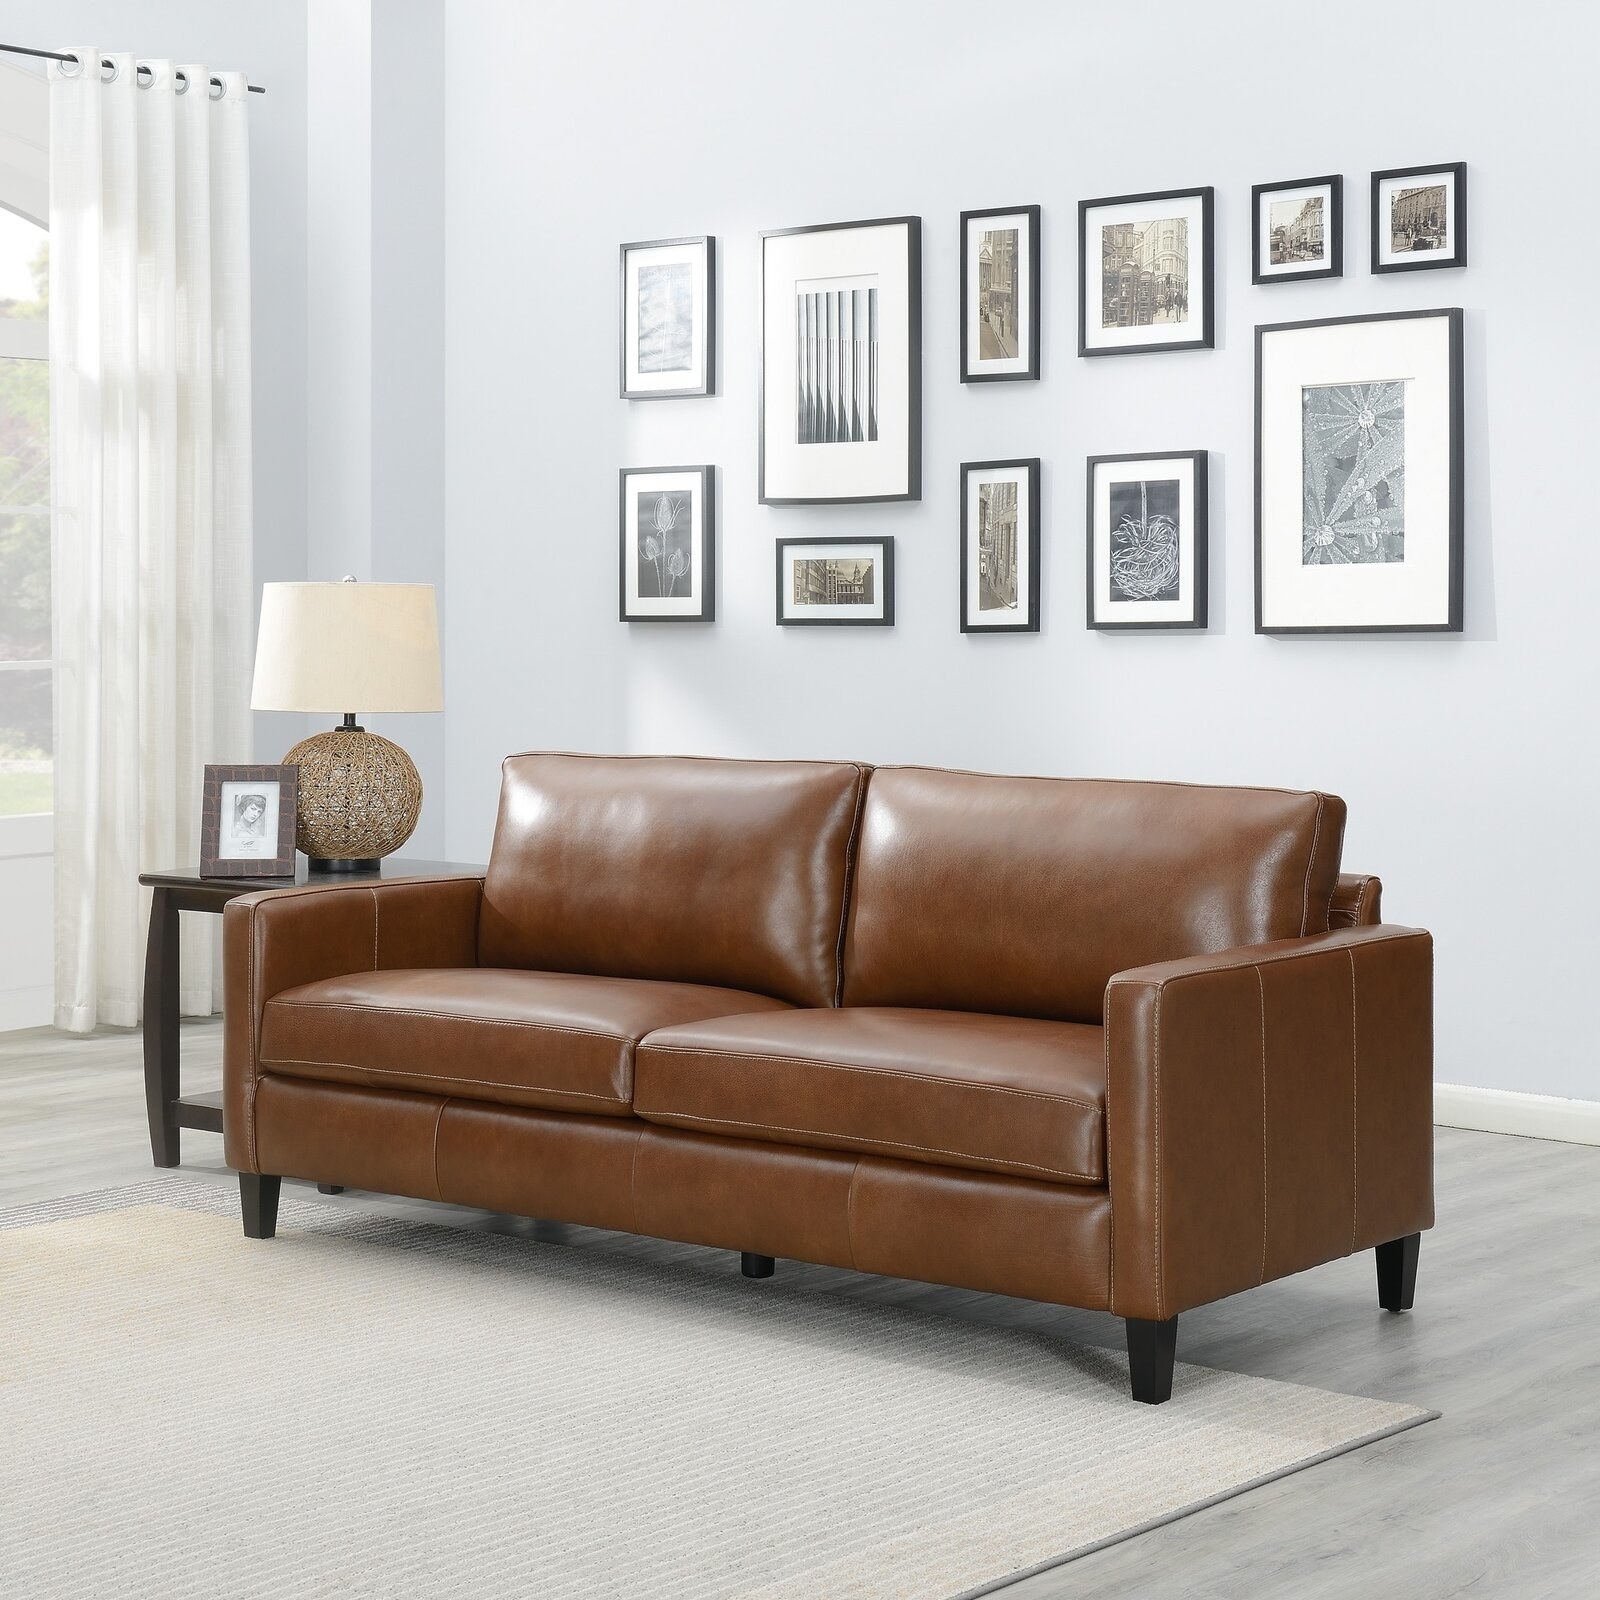 Image of the brown sofa